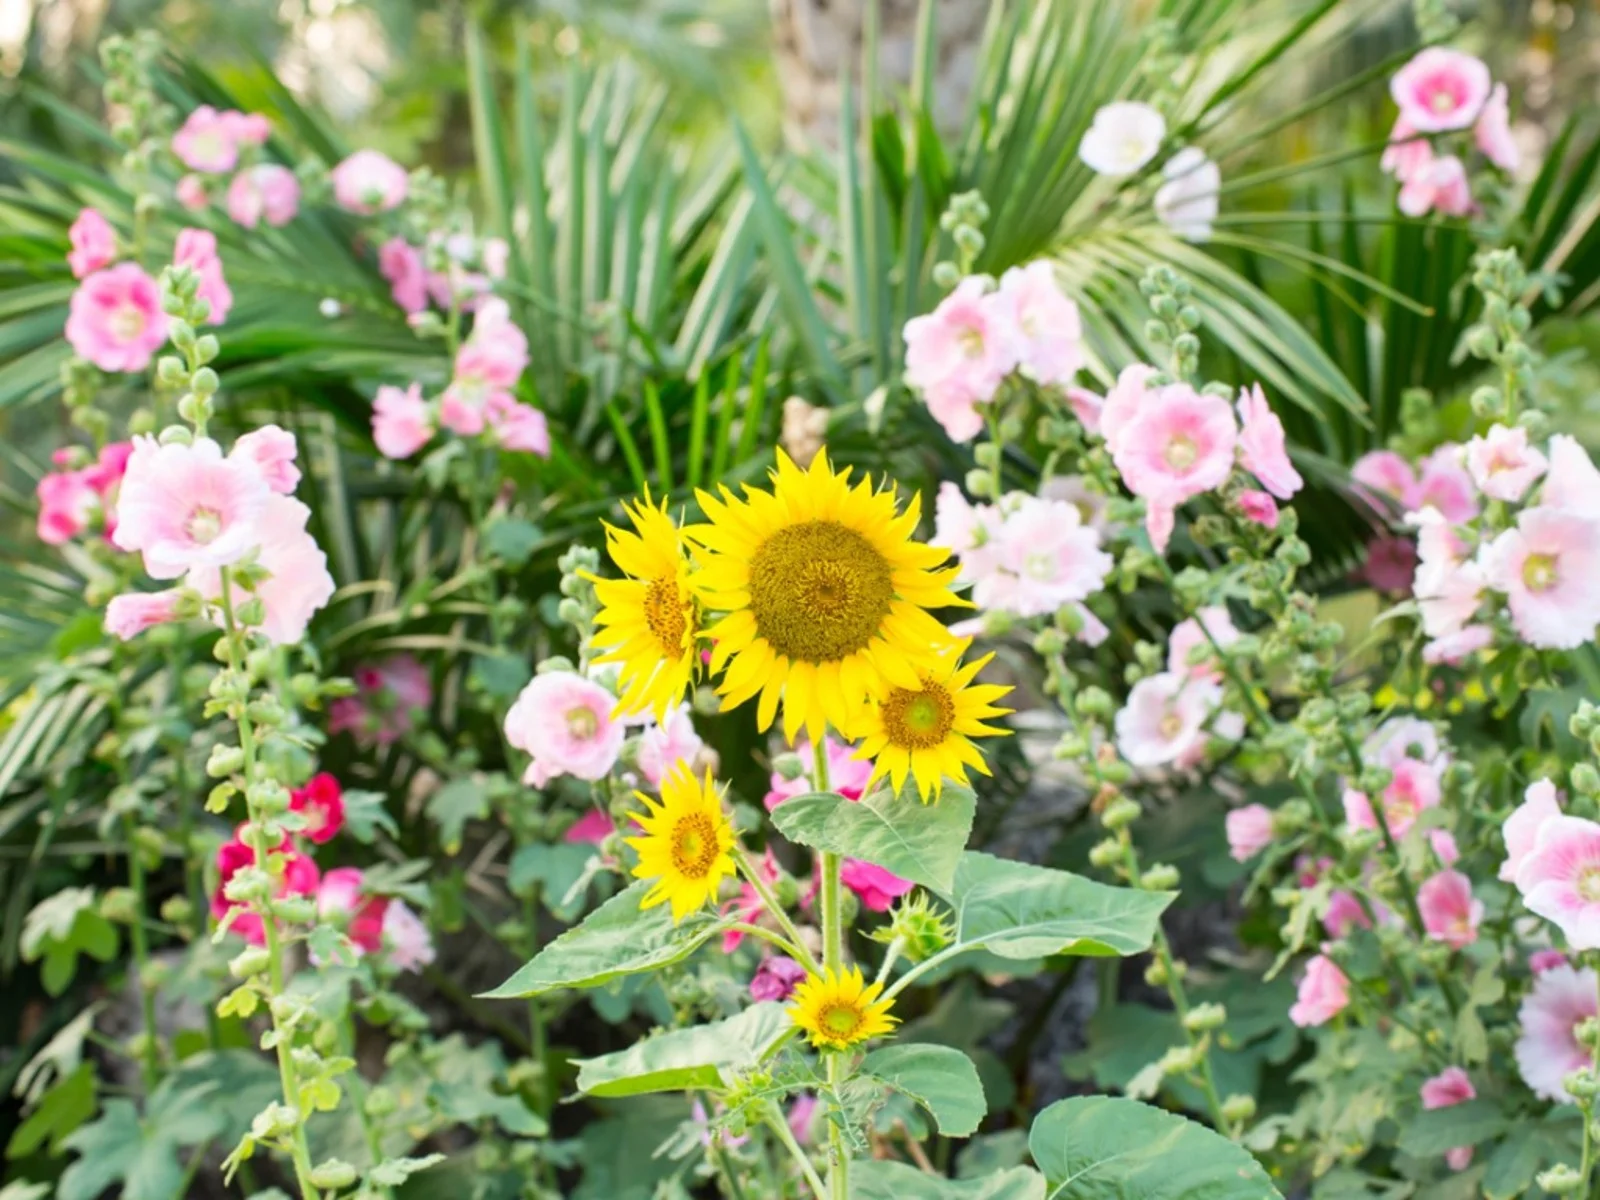 Companion Plants for Sunflowers Maximizing Garden Benefits